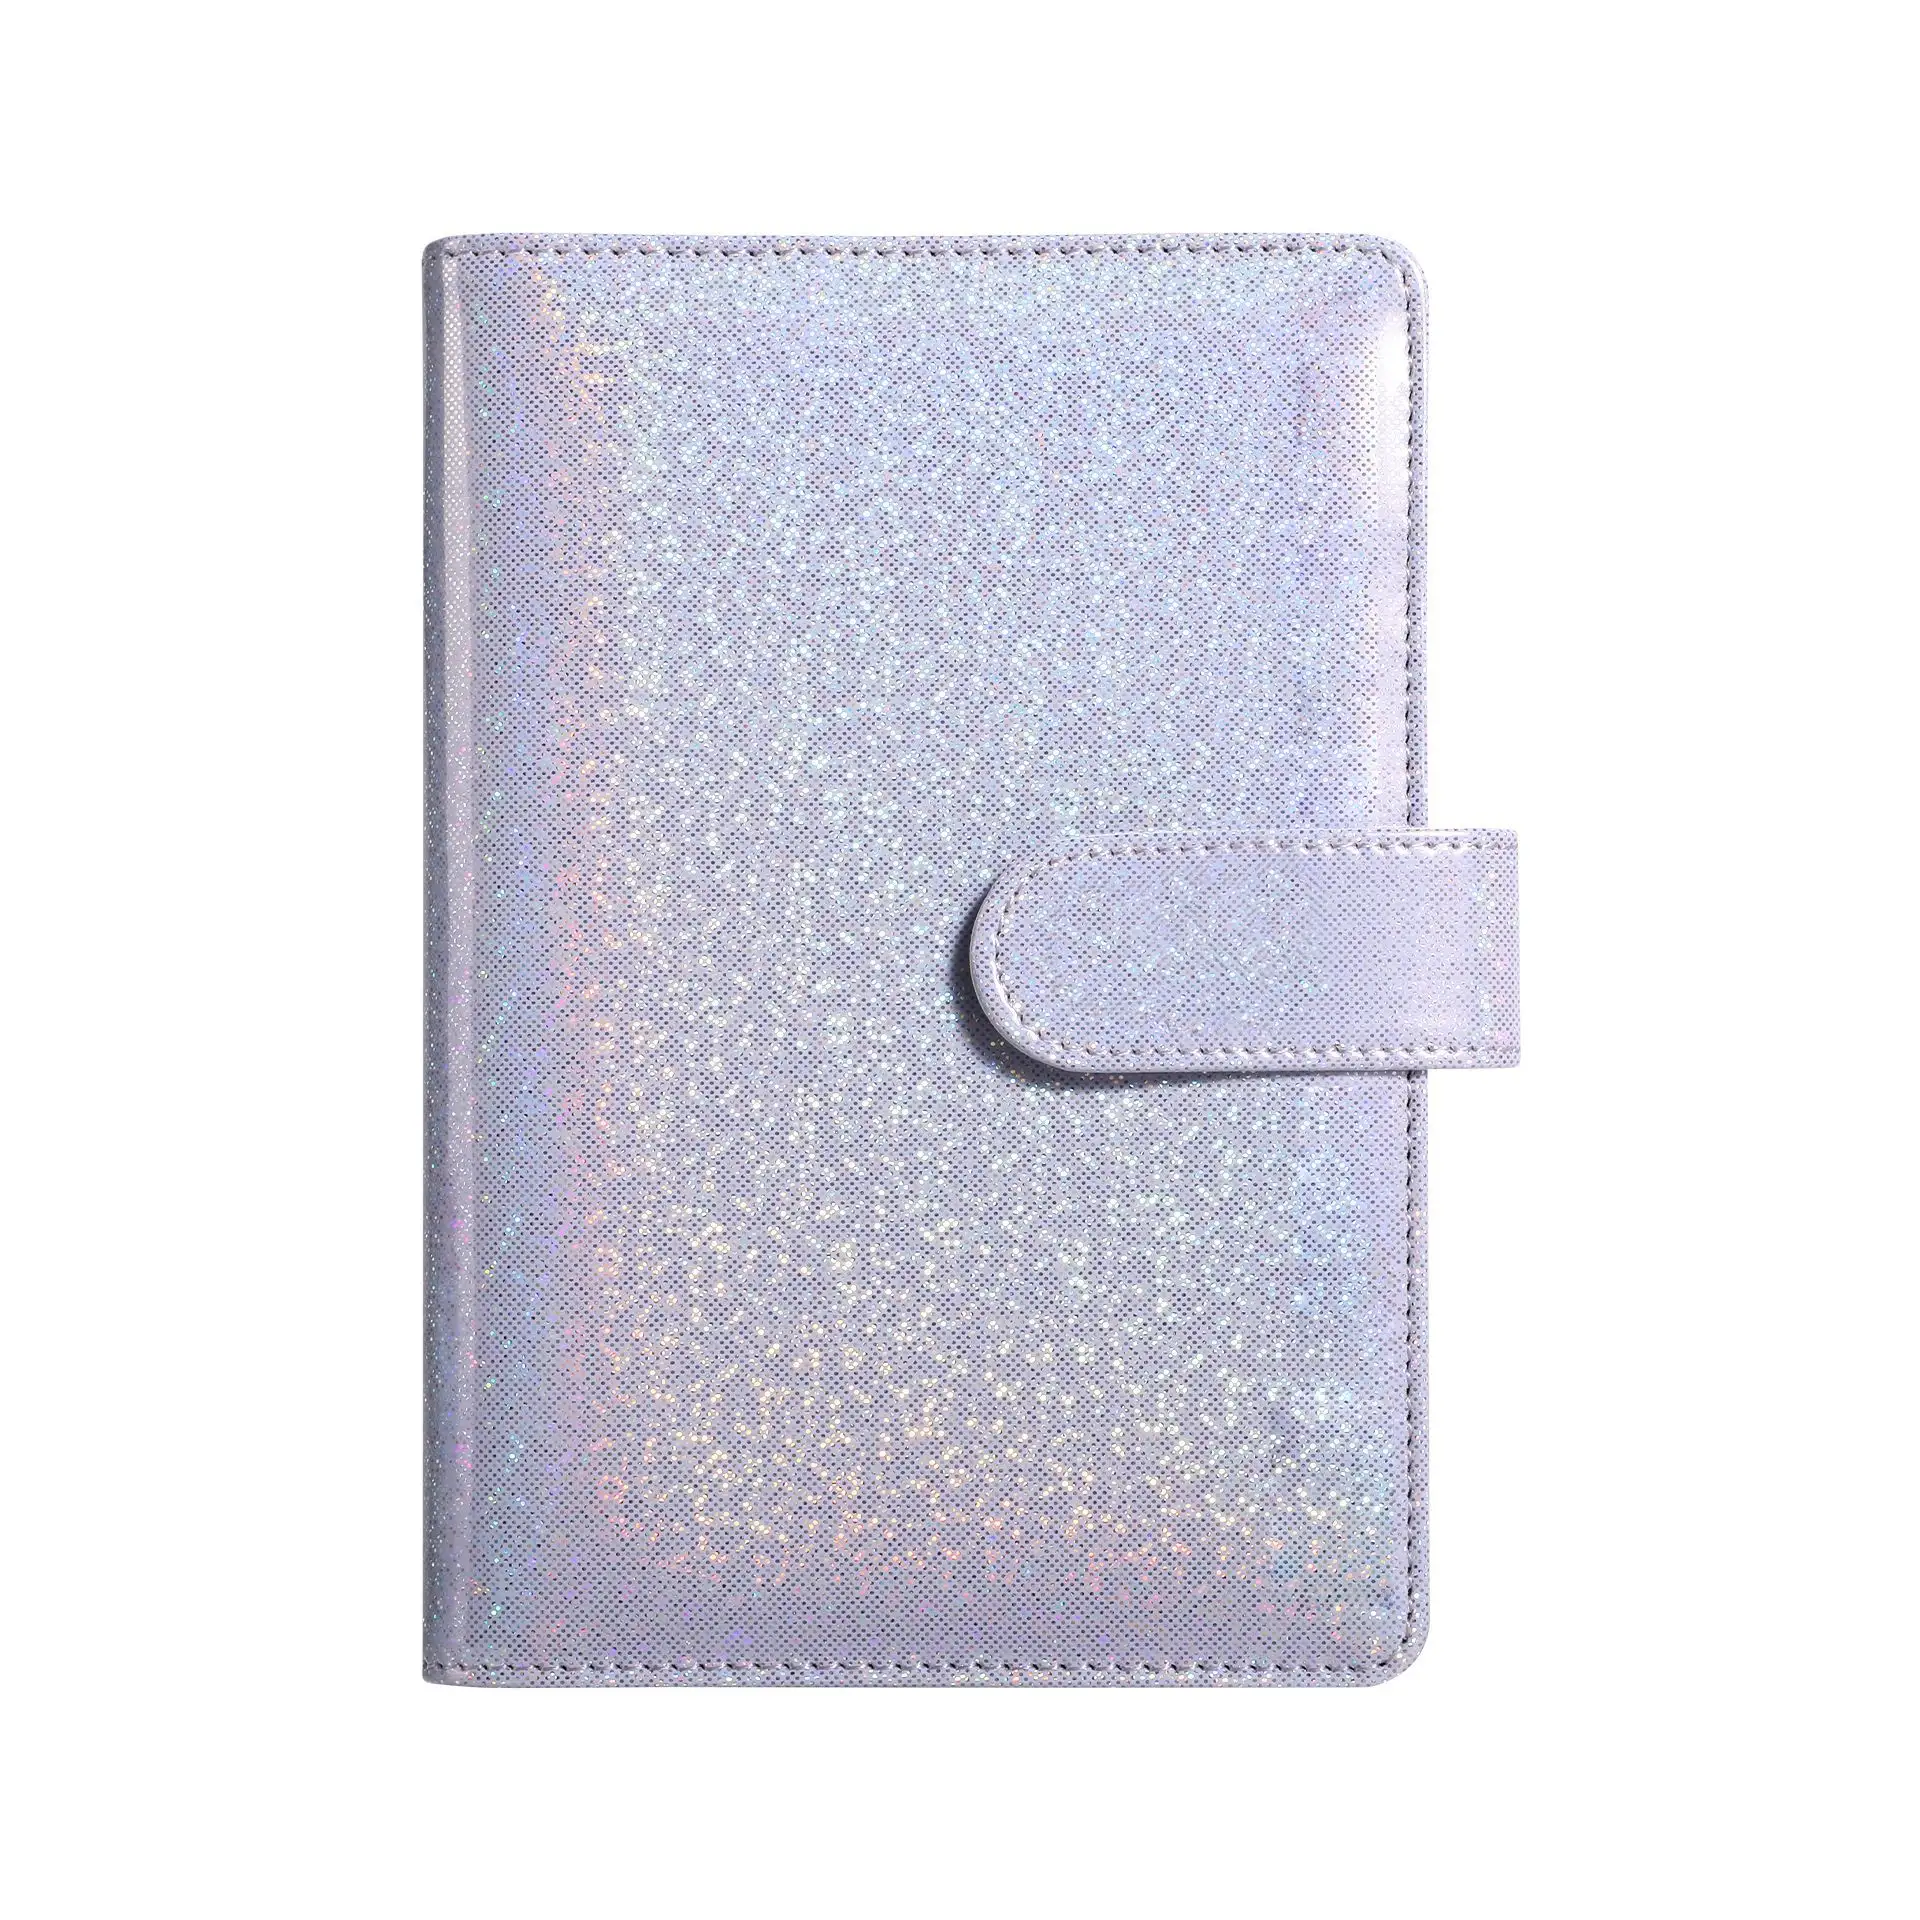 Vente en gros Carnet de notes 6 anneaux Spirale Business Planner Work Agenda Budget Binder Glitter PU Leather Cover A6 Binder